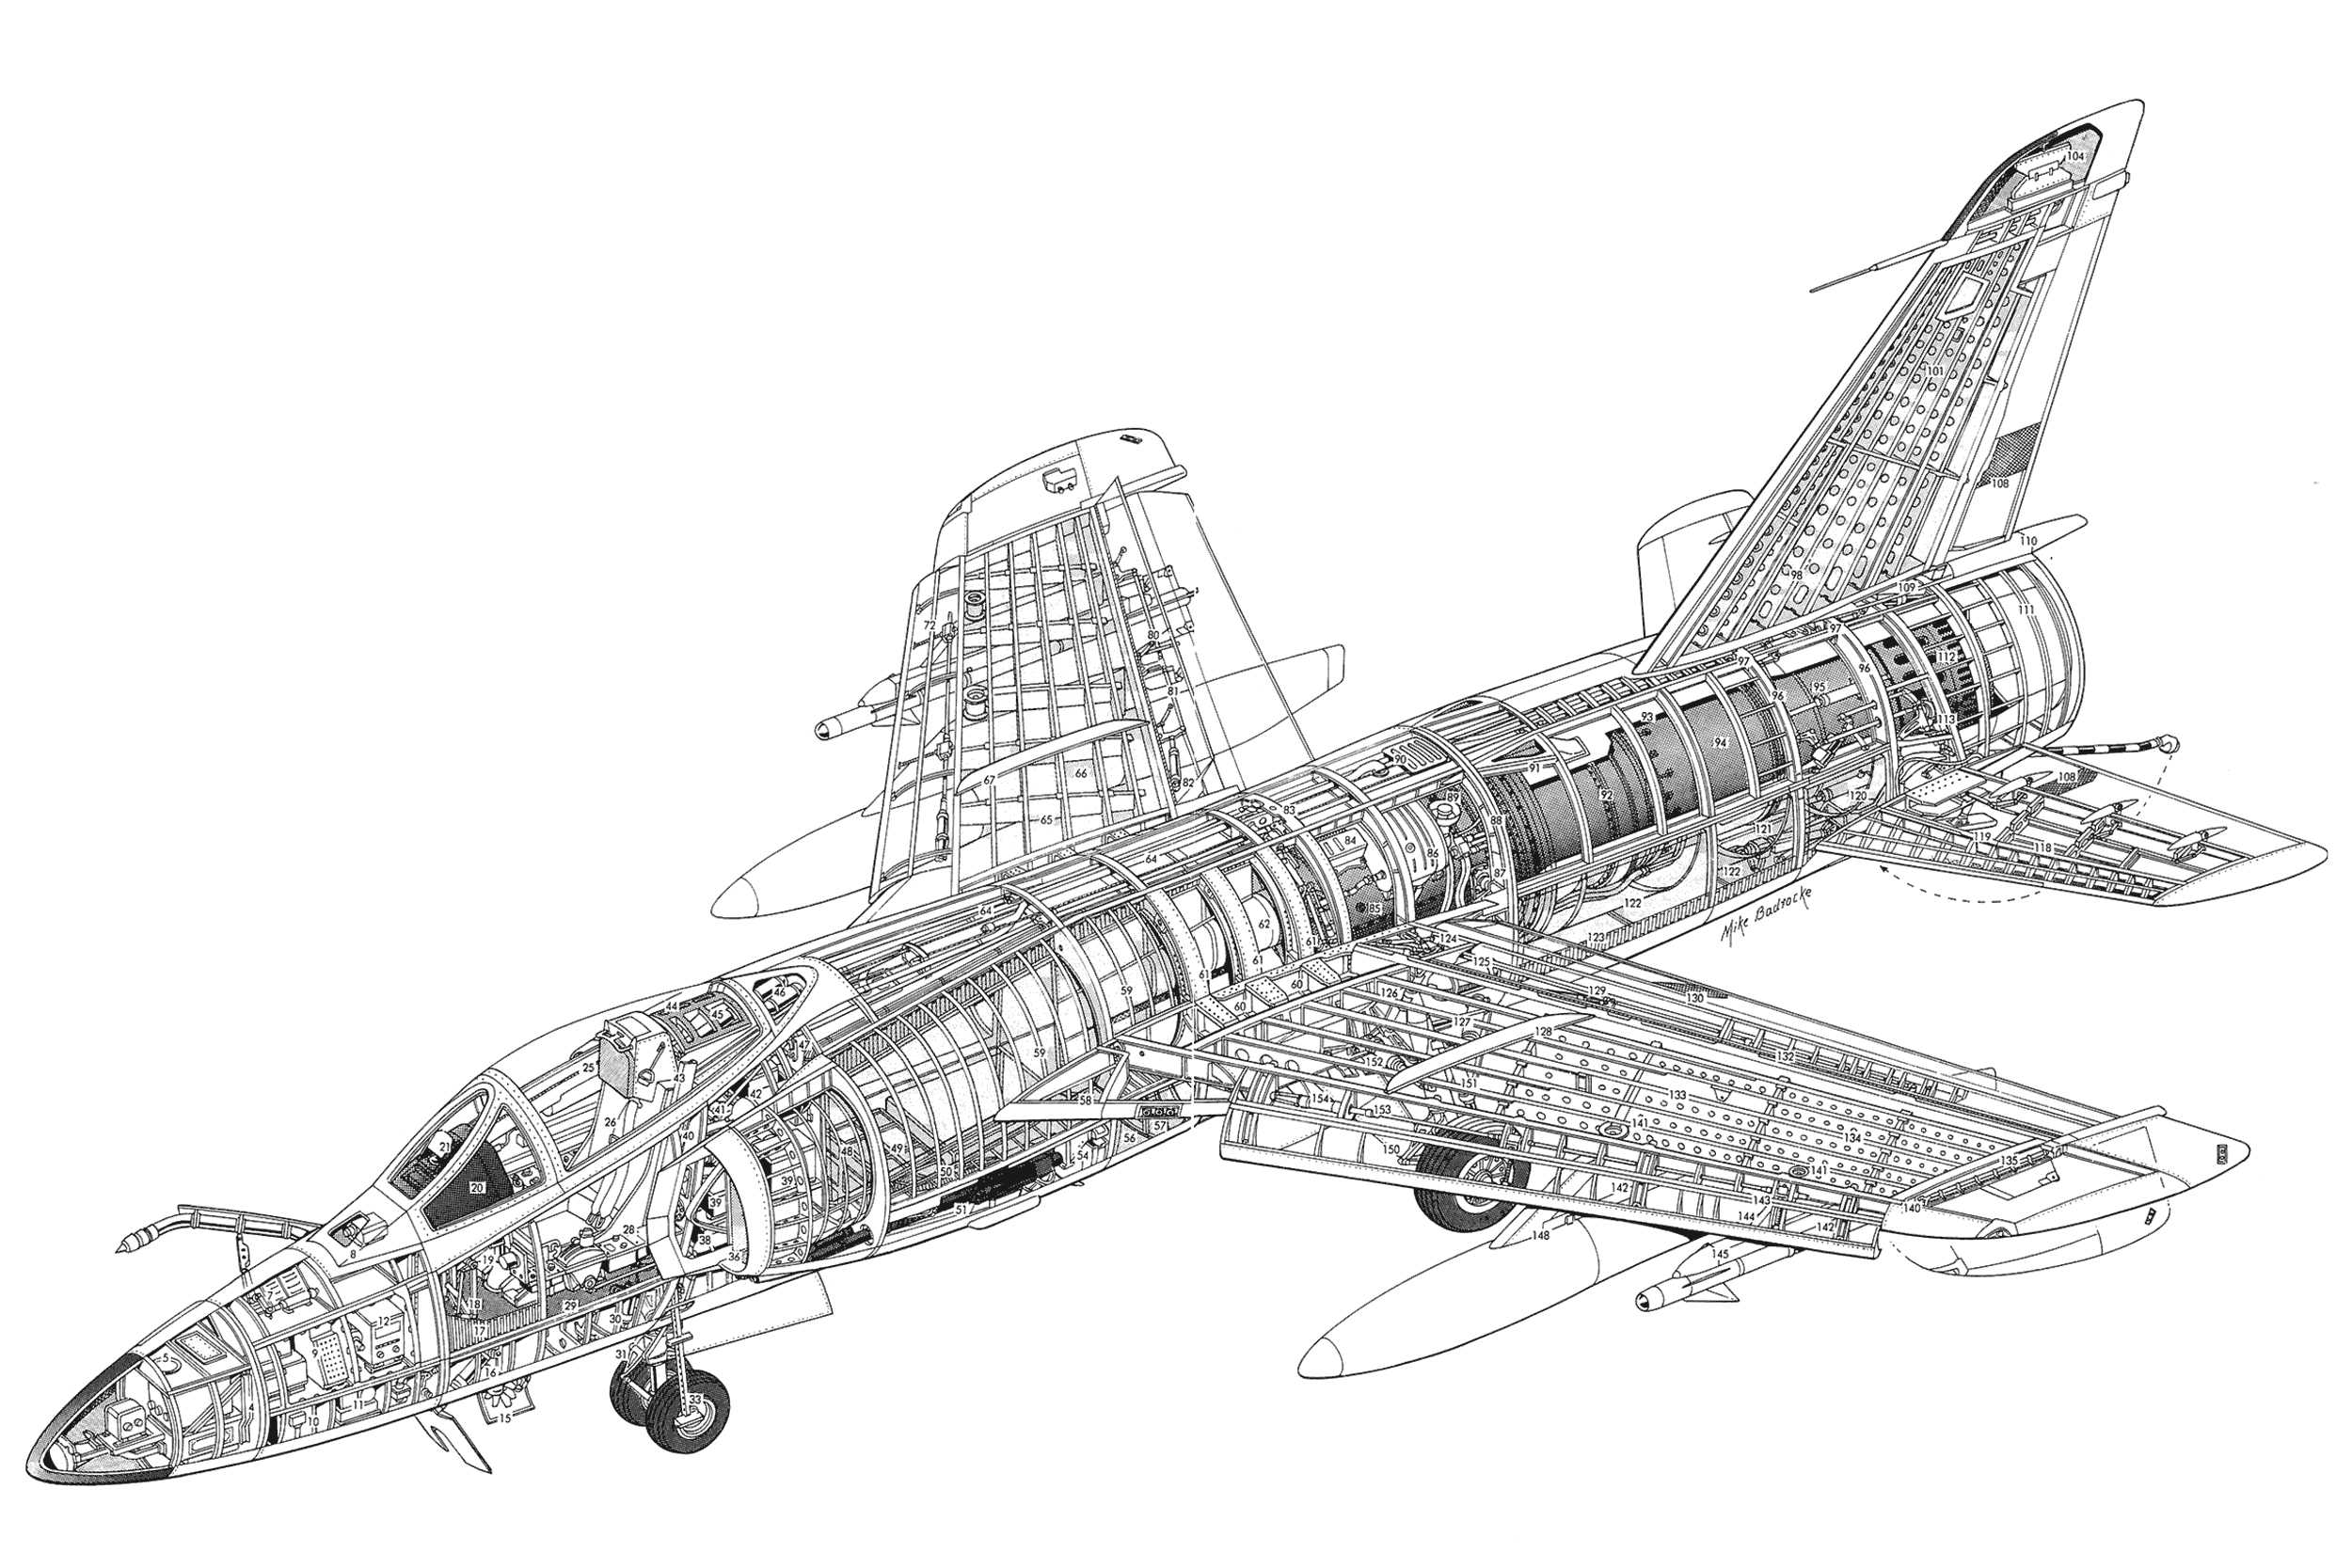 Grumman F-11 Tiger cutaway